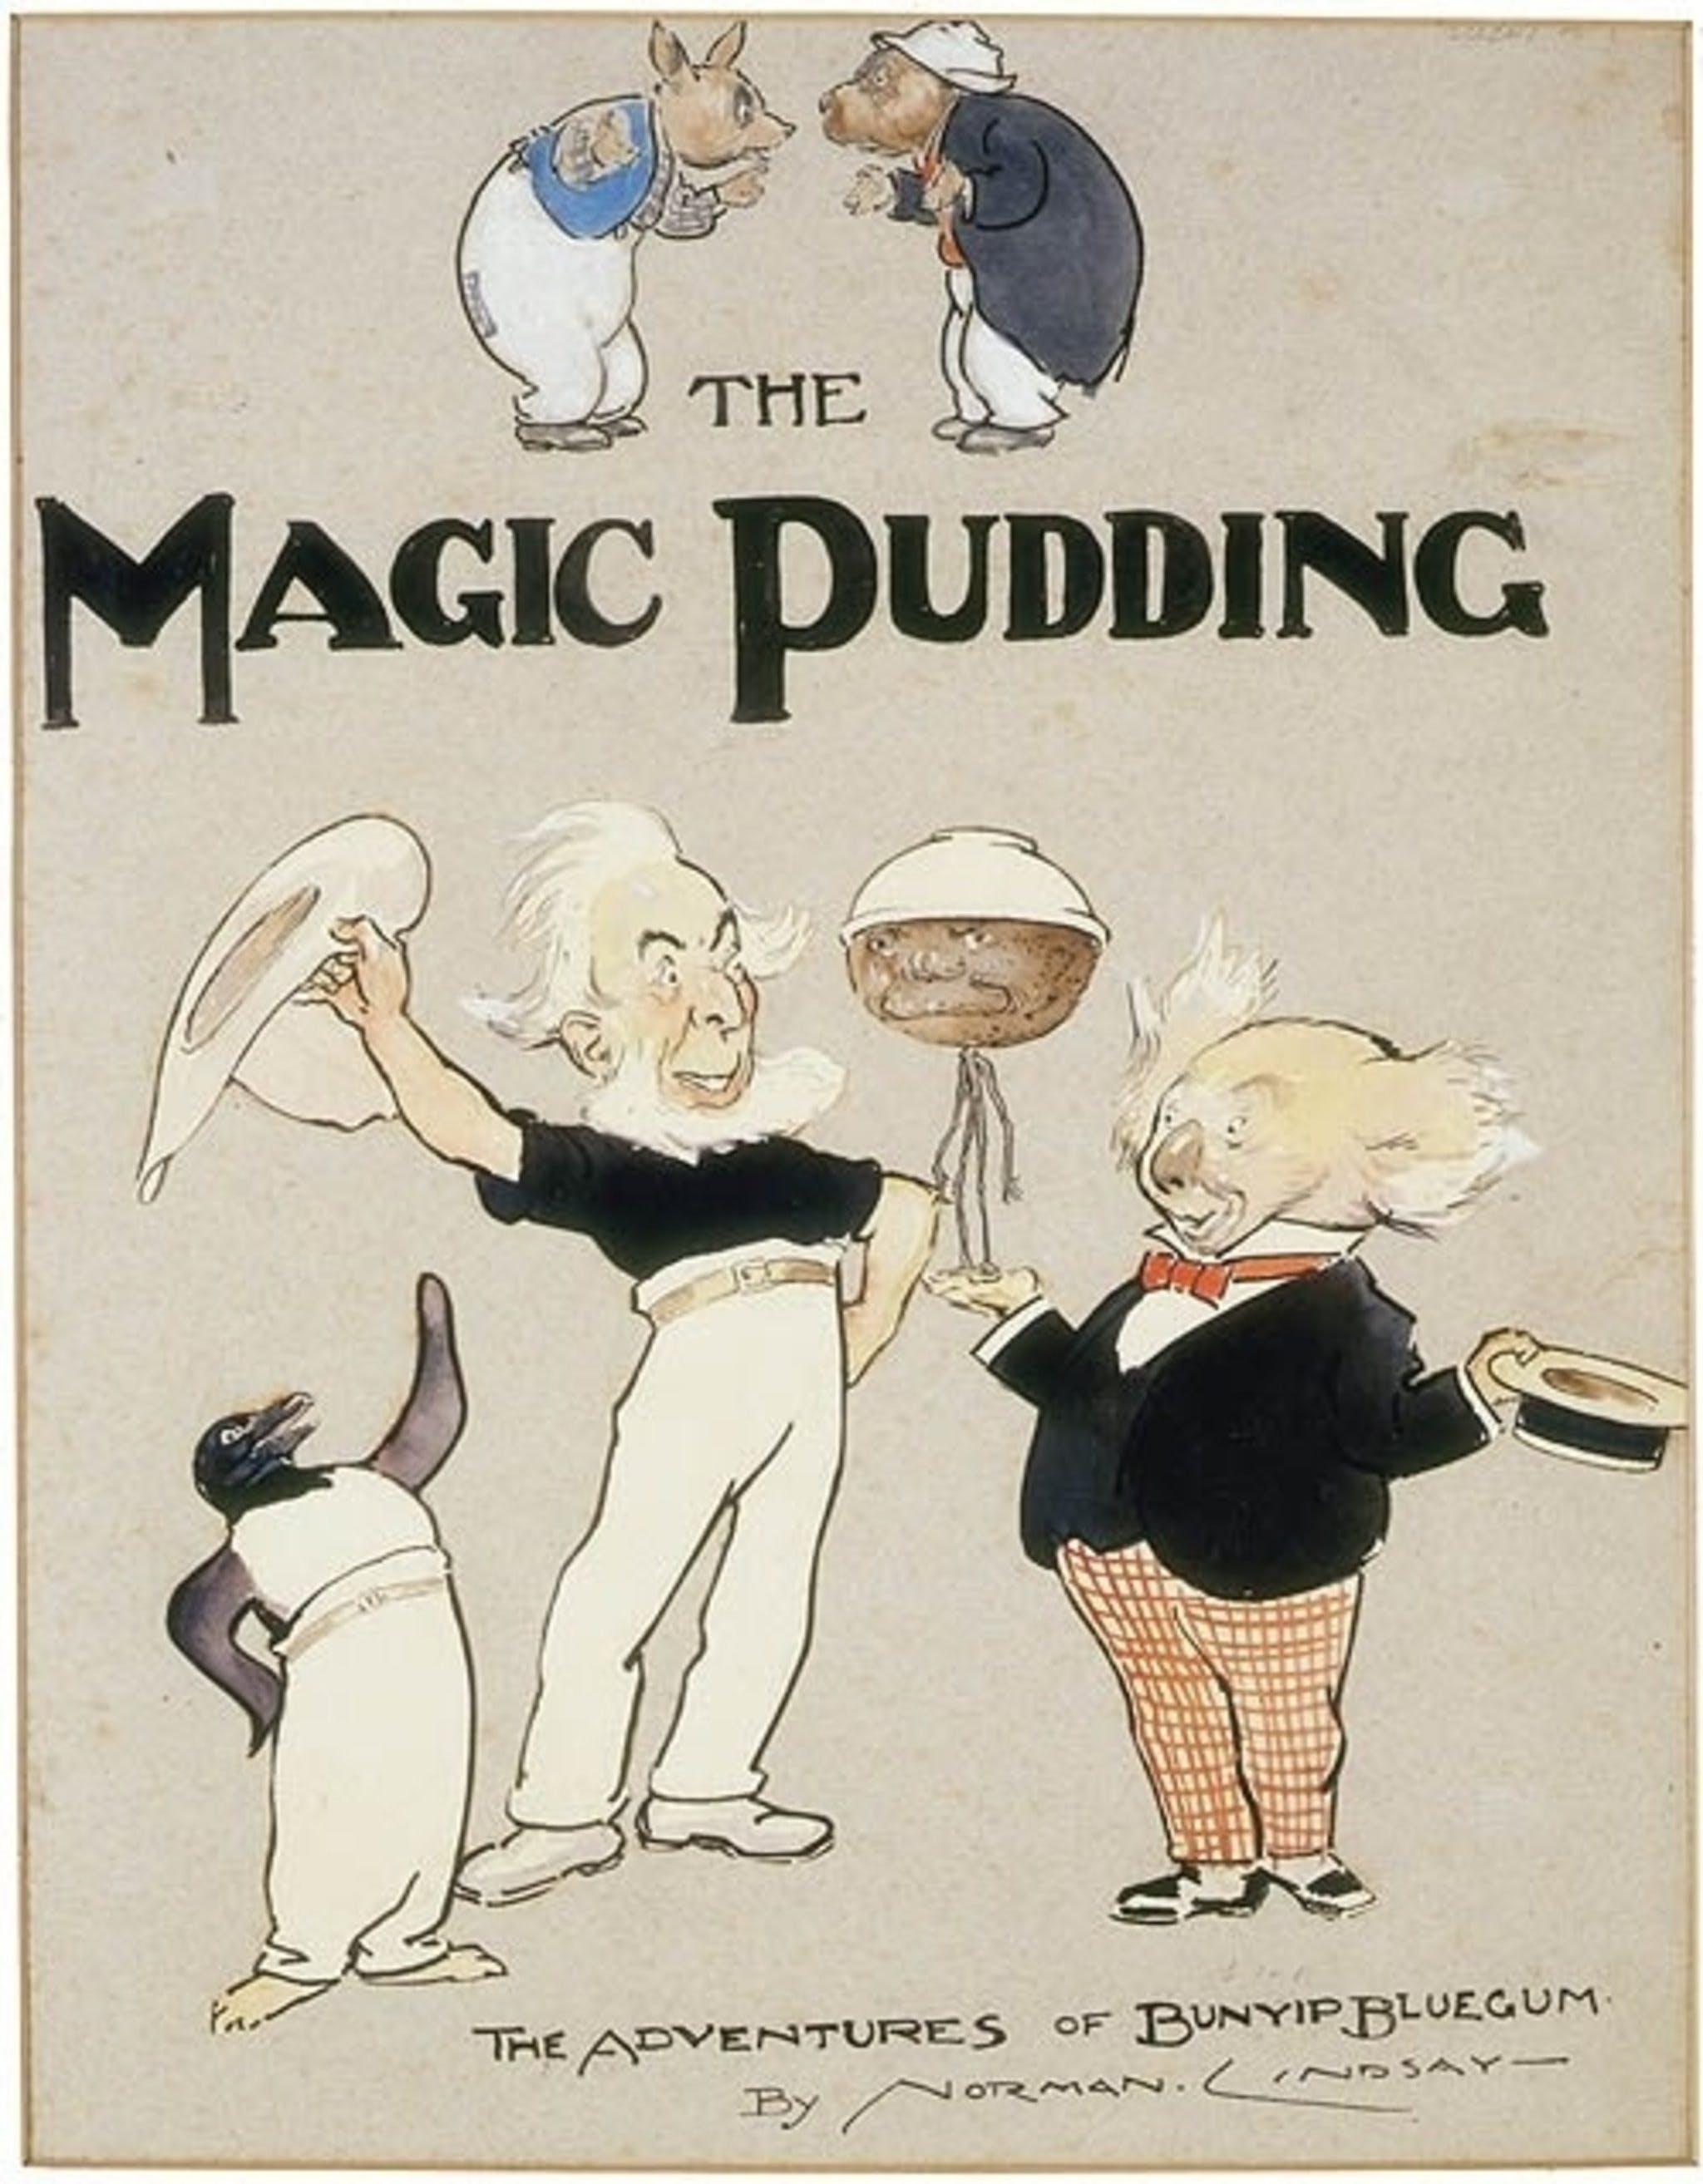 Puddin' Day at Norman Lindsay Gallery - Accommodation Brunswick Heads